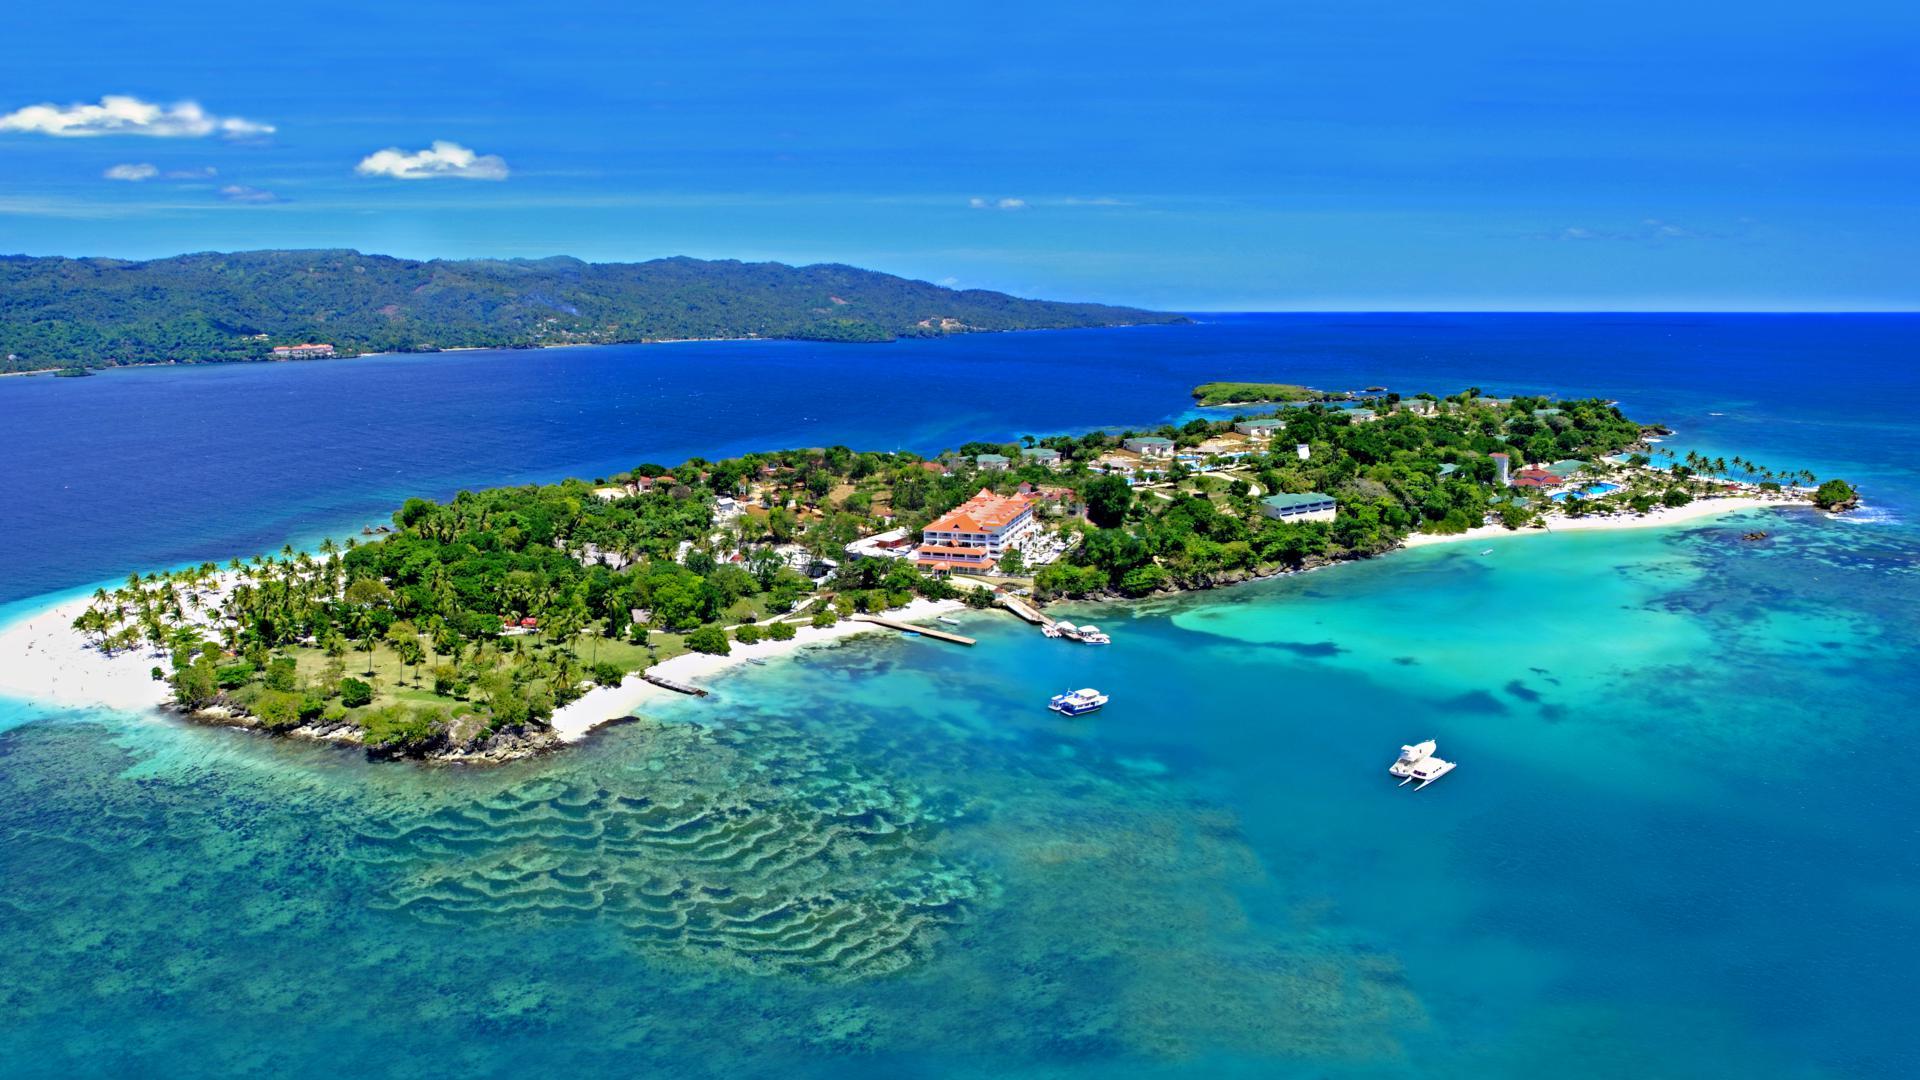 The private luxury island of Cayo Levantado in the bay of Samaná